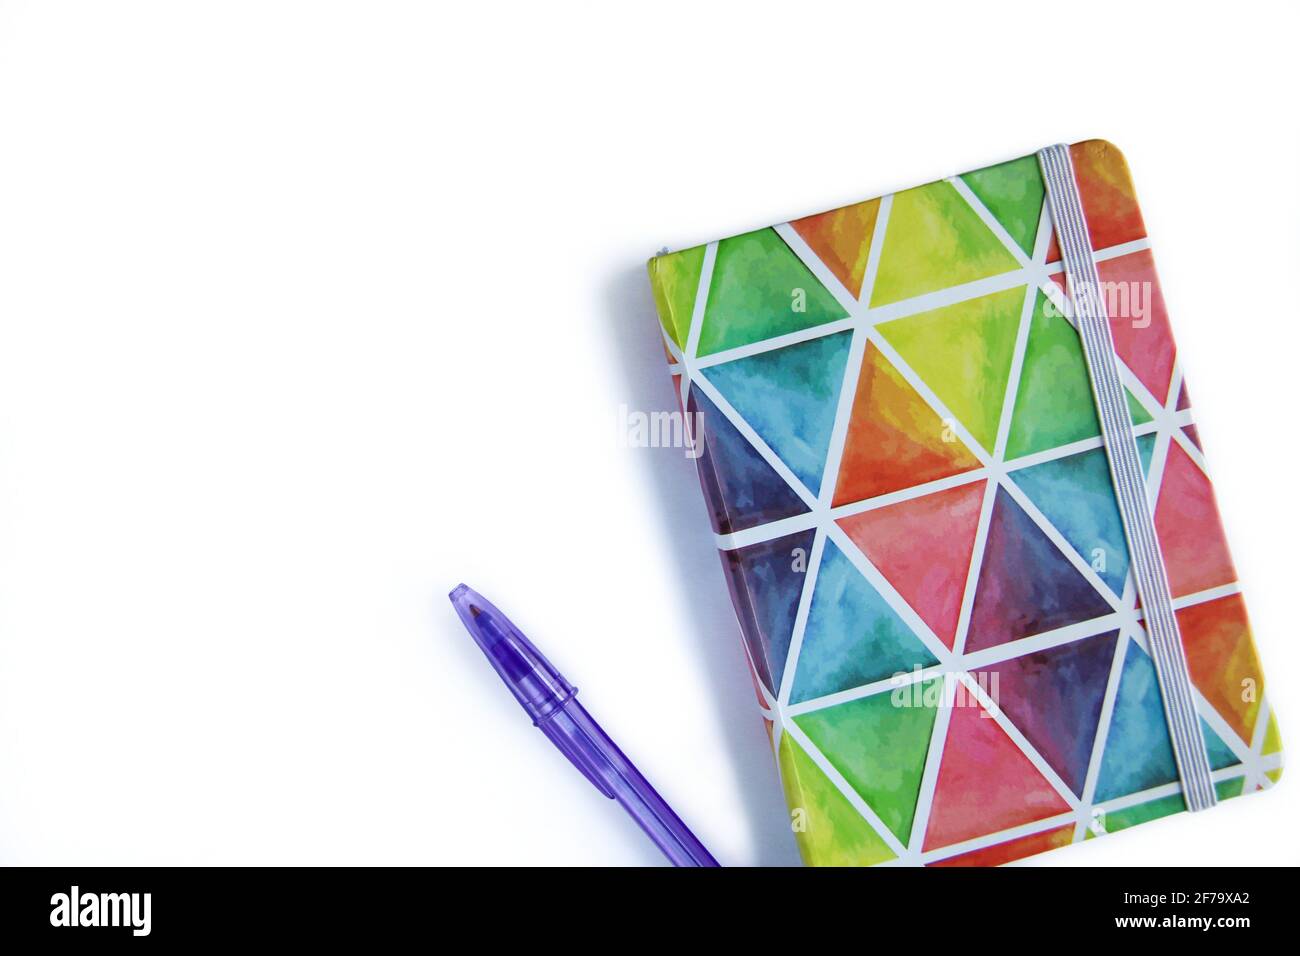 https://c8.alamy.com/compes/2f79xa2/colorido-cuaderno-arco-iris-con-boligrafo-sobre-fondo-blanco-colores-del-arco-iris-2f79xa2.jpg